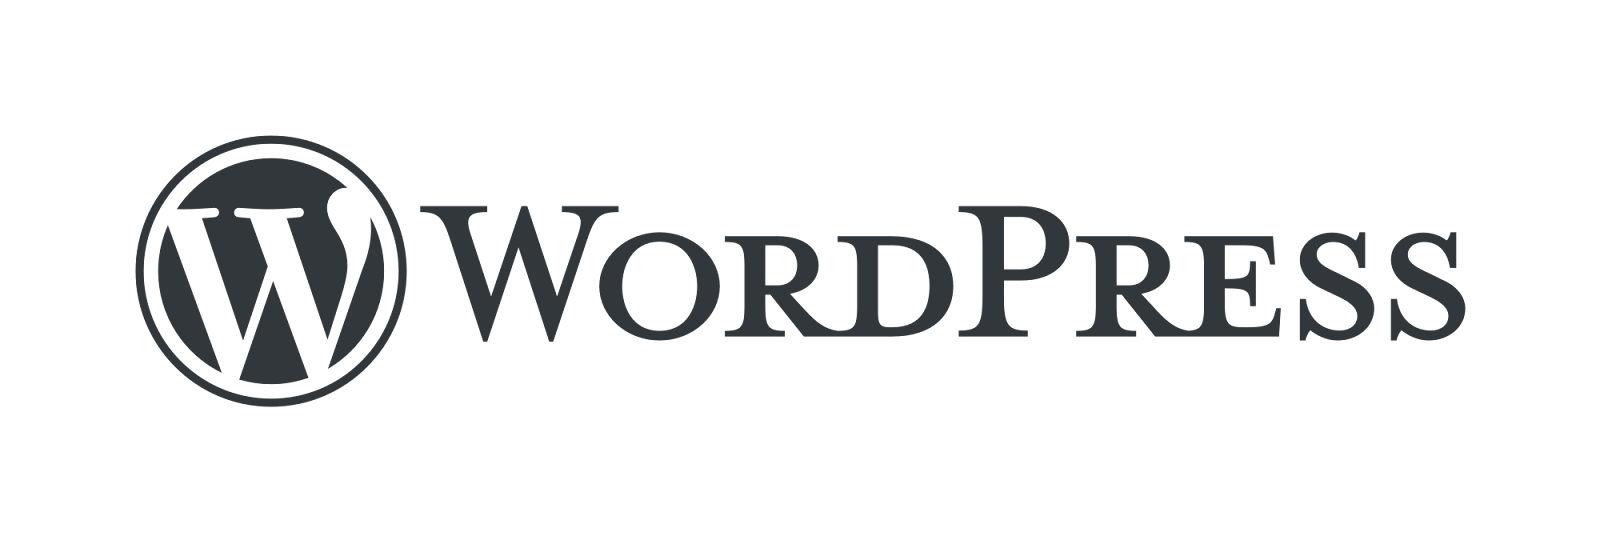 WordPress: WordPress logo